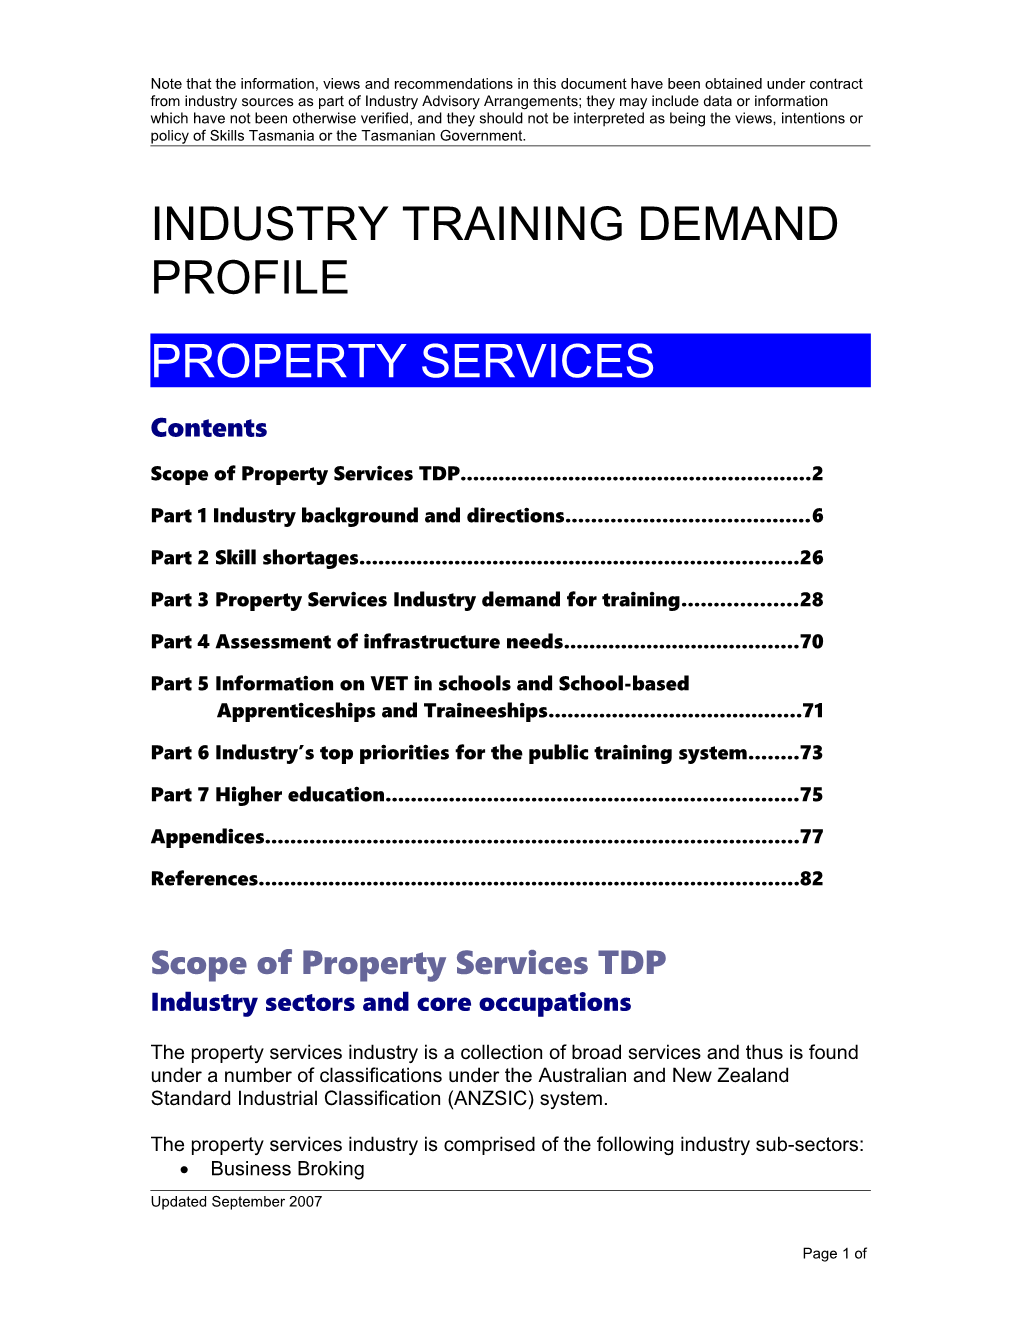 Industry Training Demand Profile